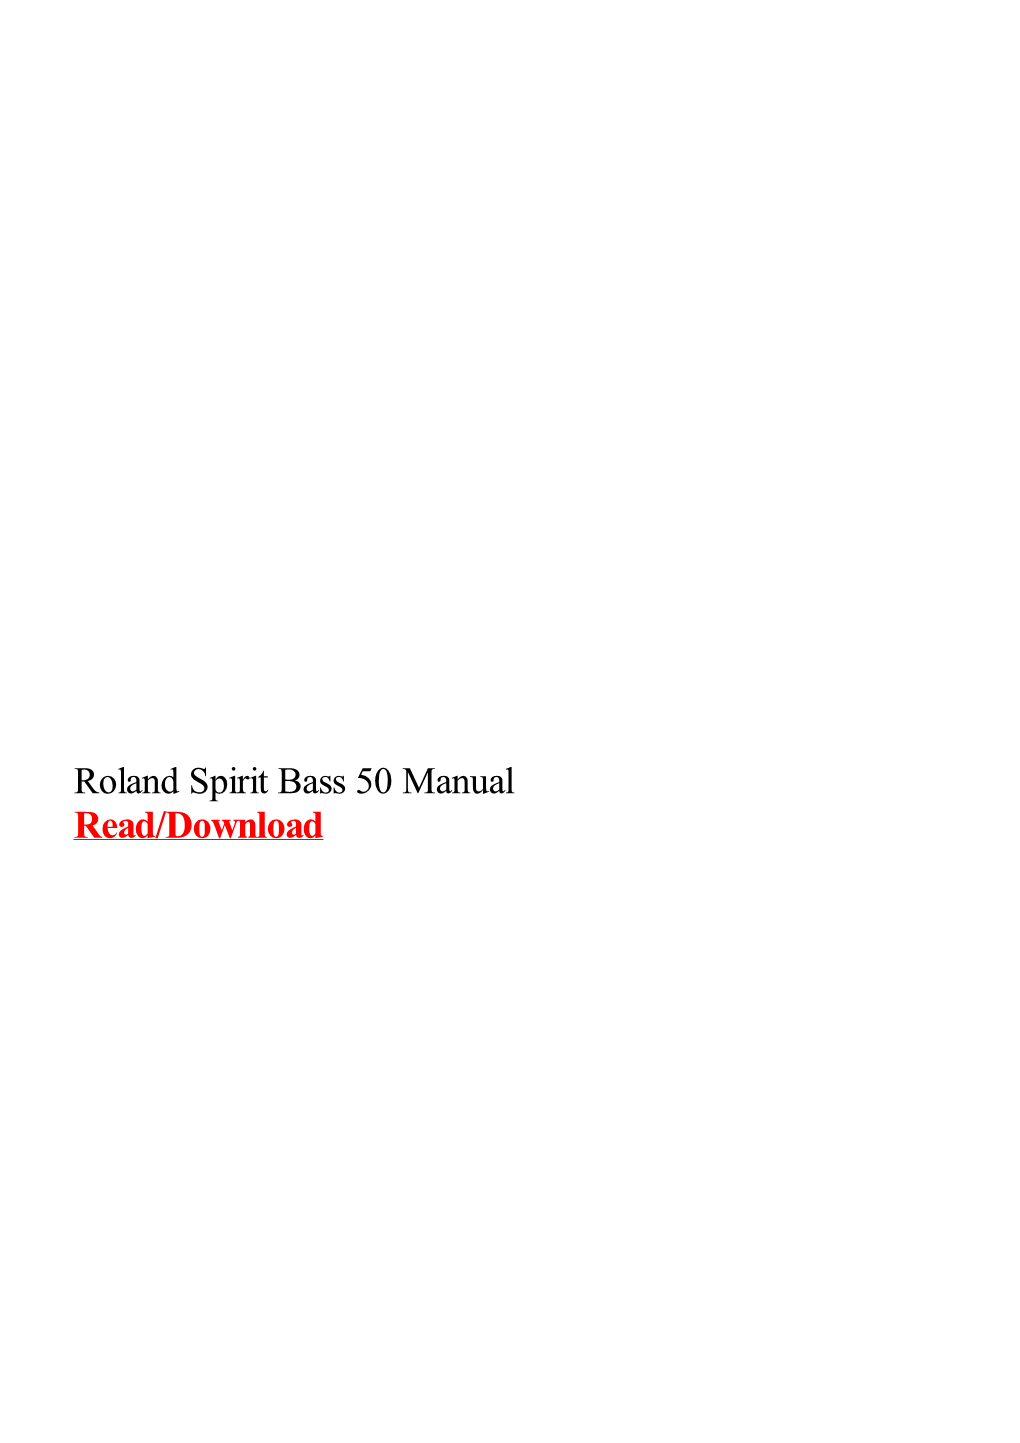 Roland Spirit Bass 50 Manual Manual Online